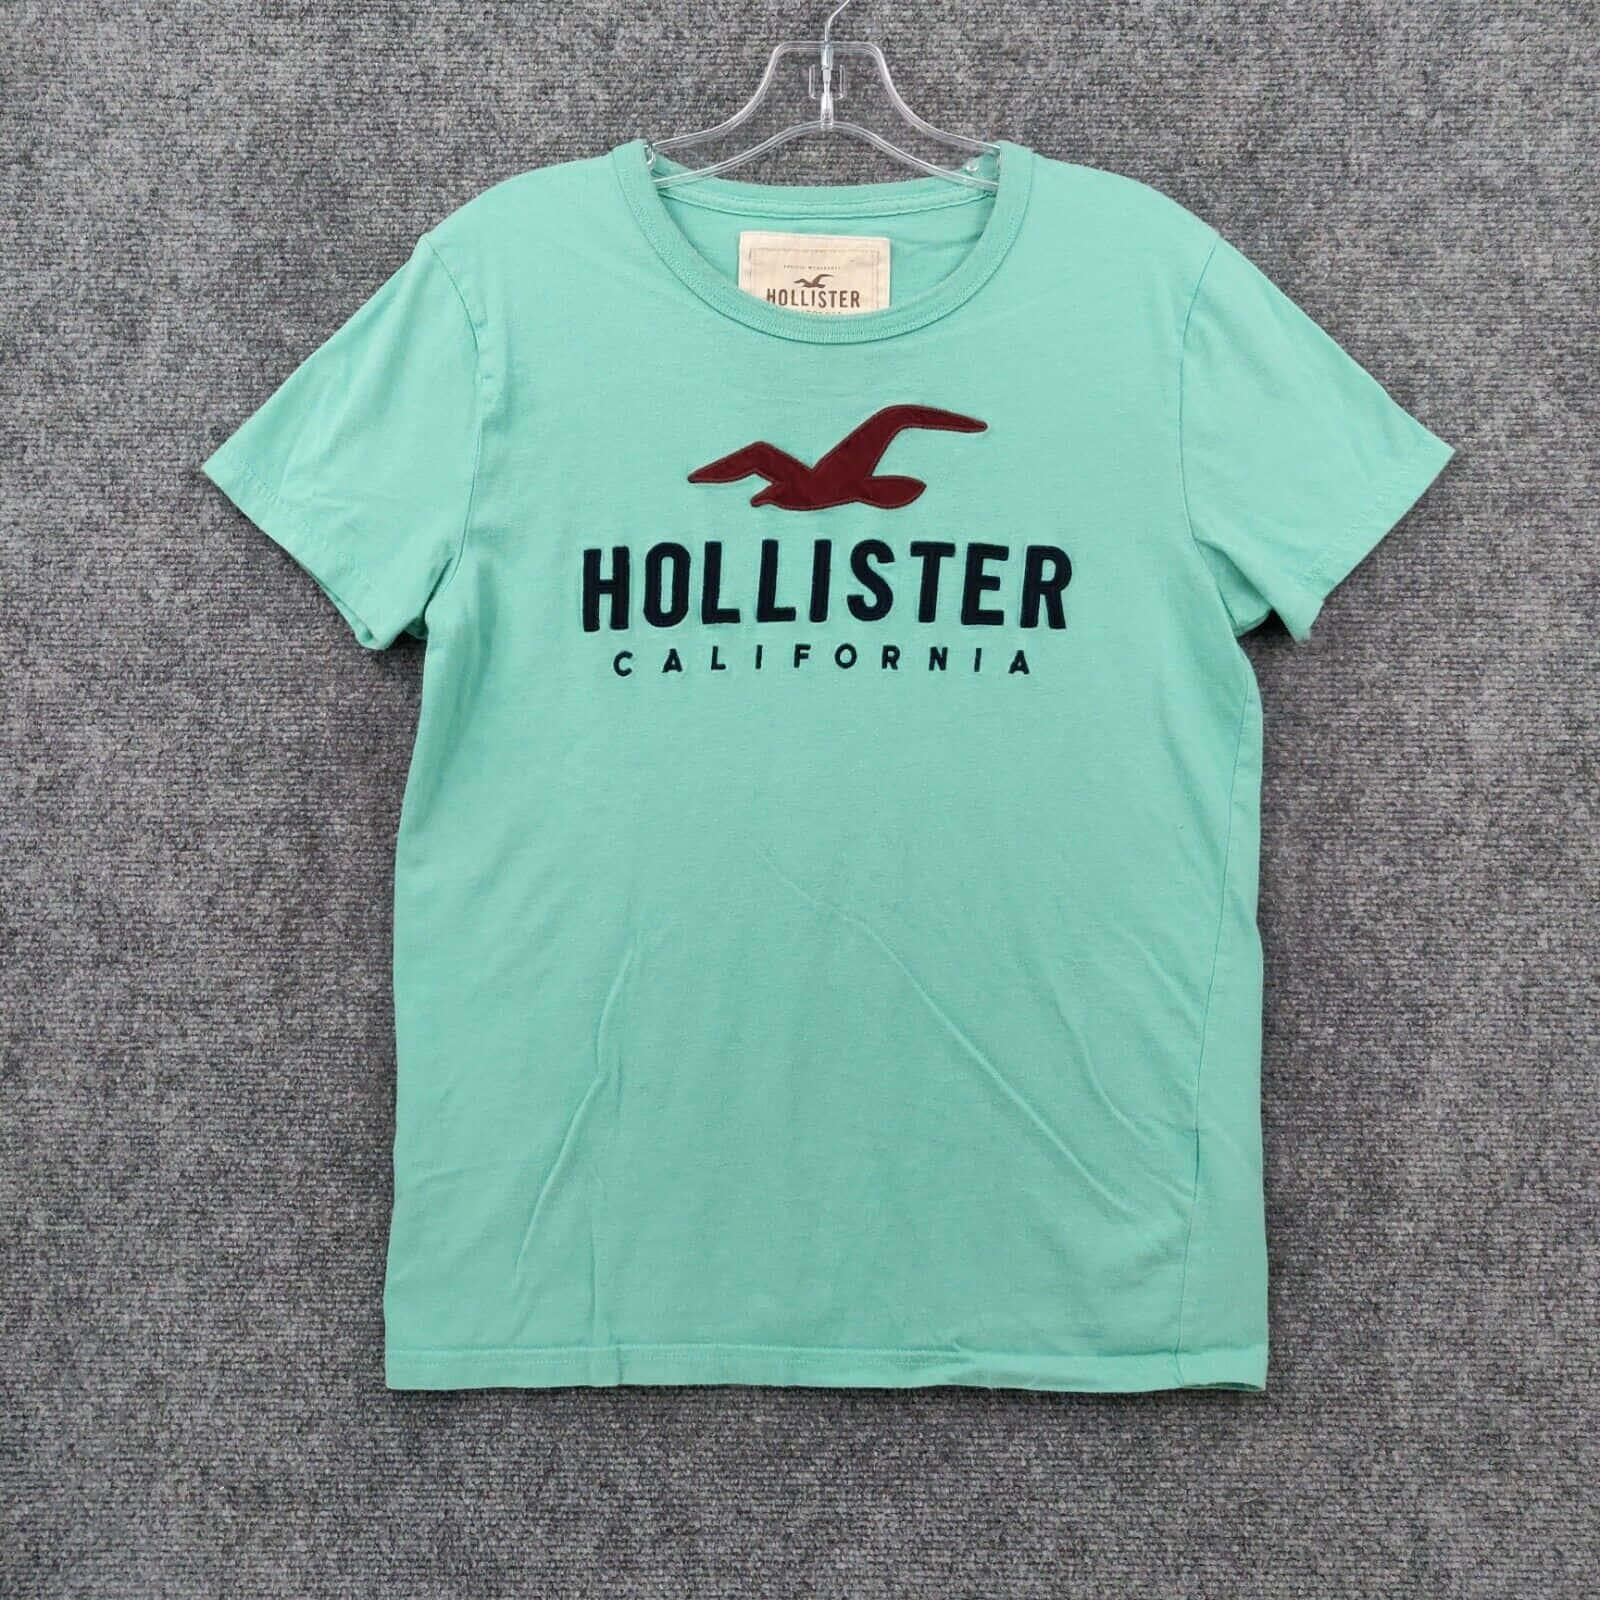 Hollistercalifornia T-shirt